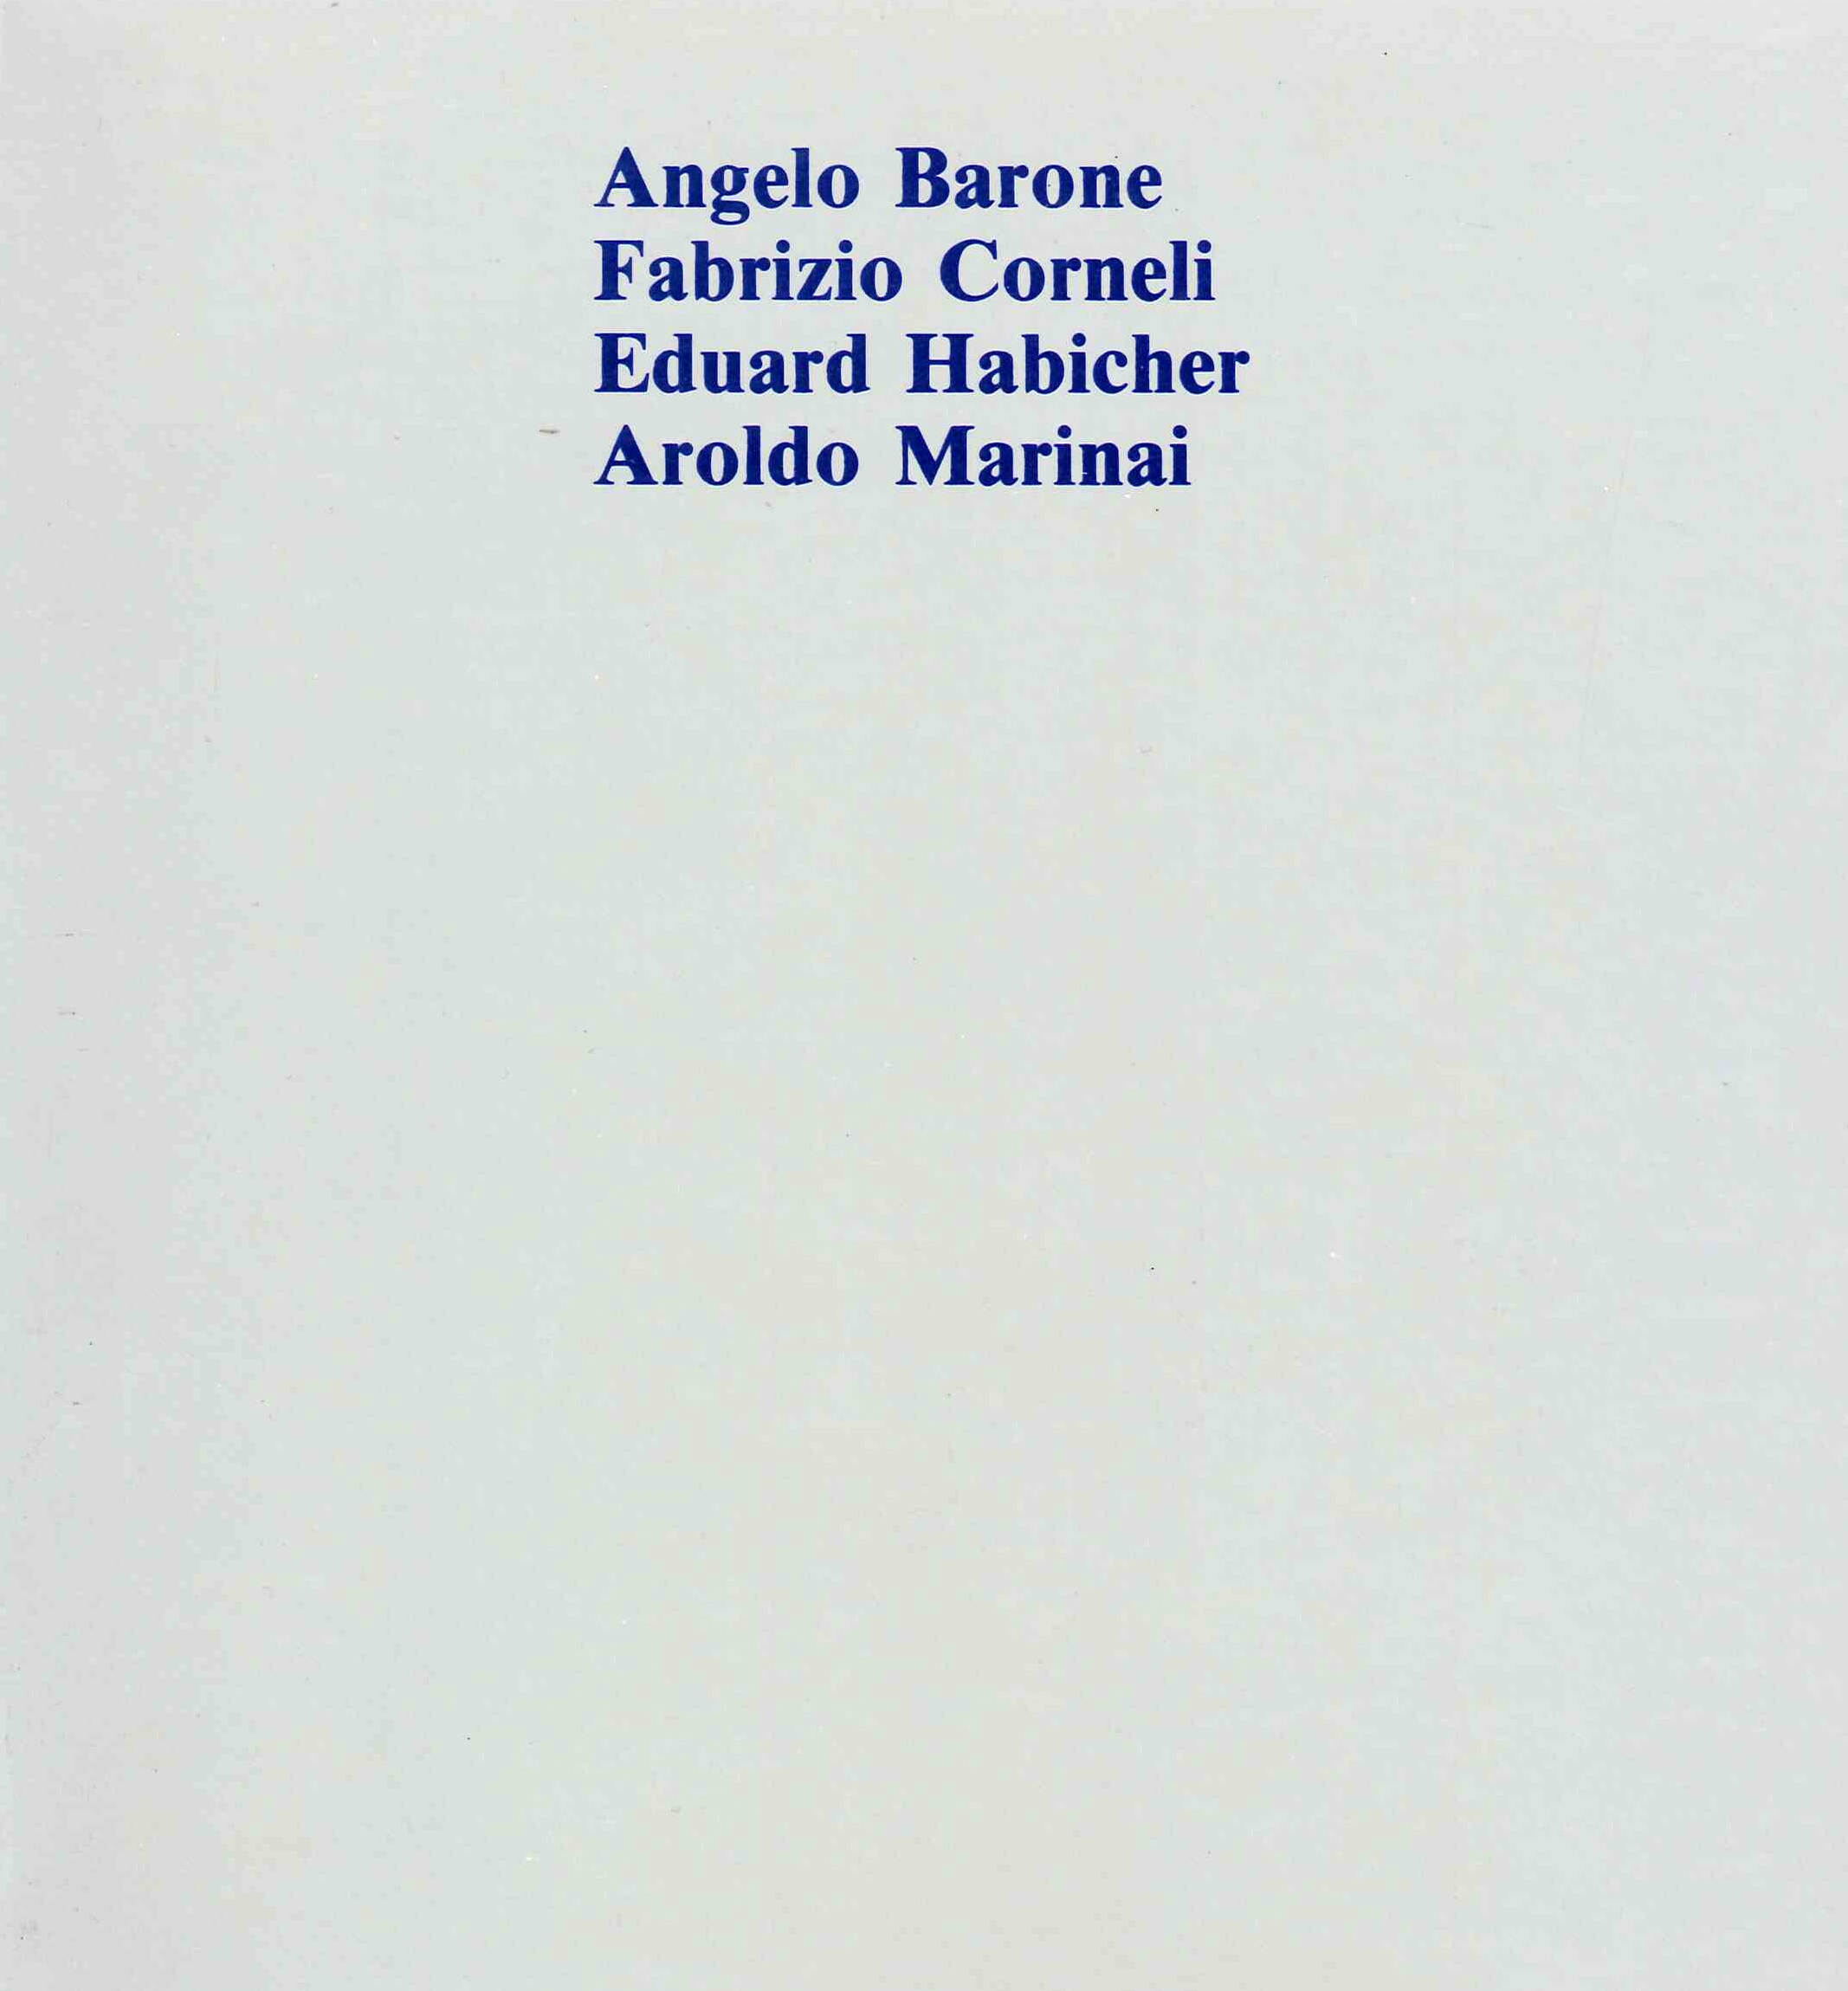 Angelo Barone - Fabrizio Corneli - Eduard Habicher - Aroldo Marinai. - Bild 1 von 1